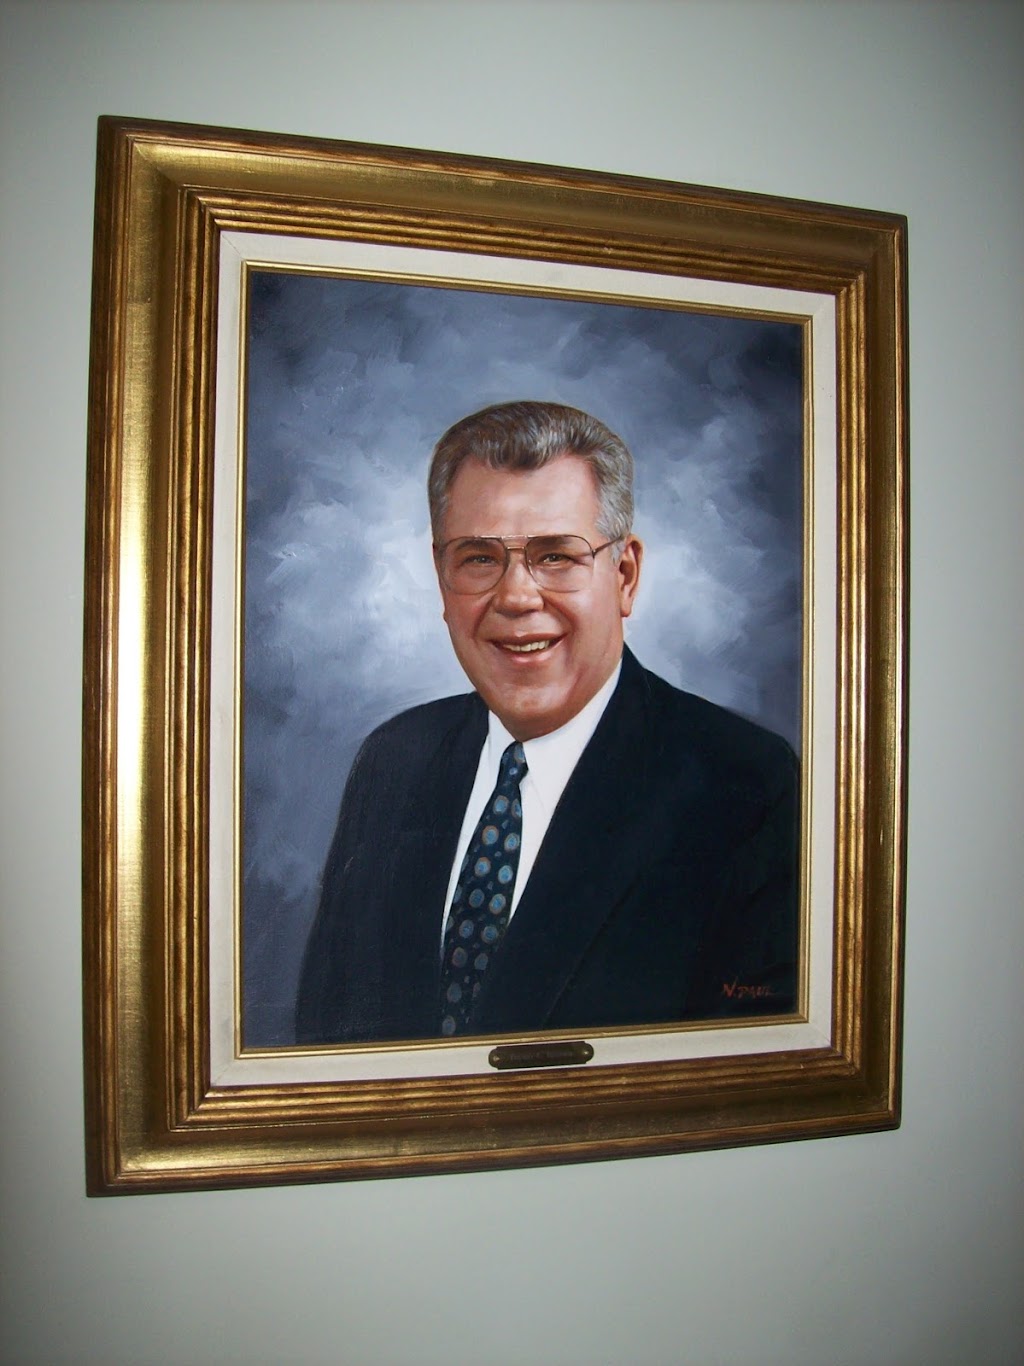 David C Brown Funeral Home | 460 E Huron River Dr, Belleville, MI 48111, USA | Phone: (734) 697-4500